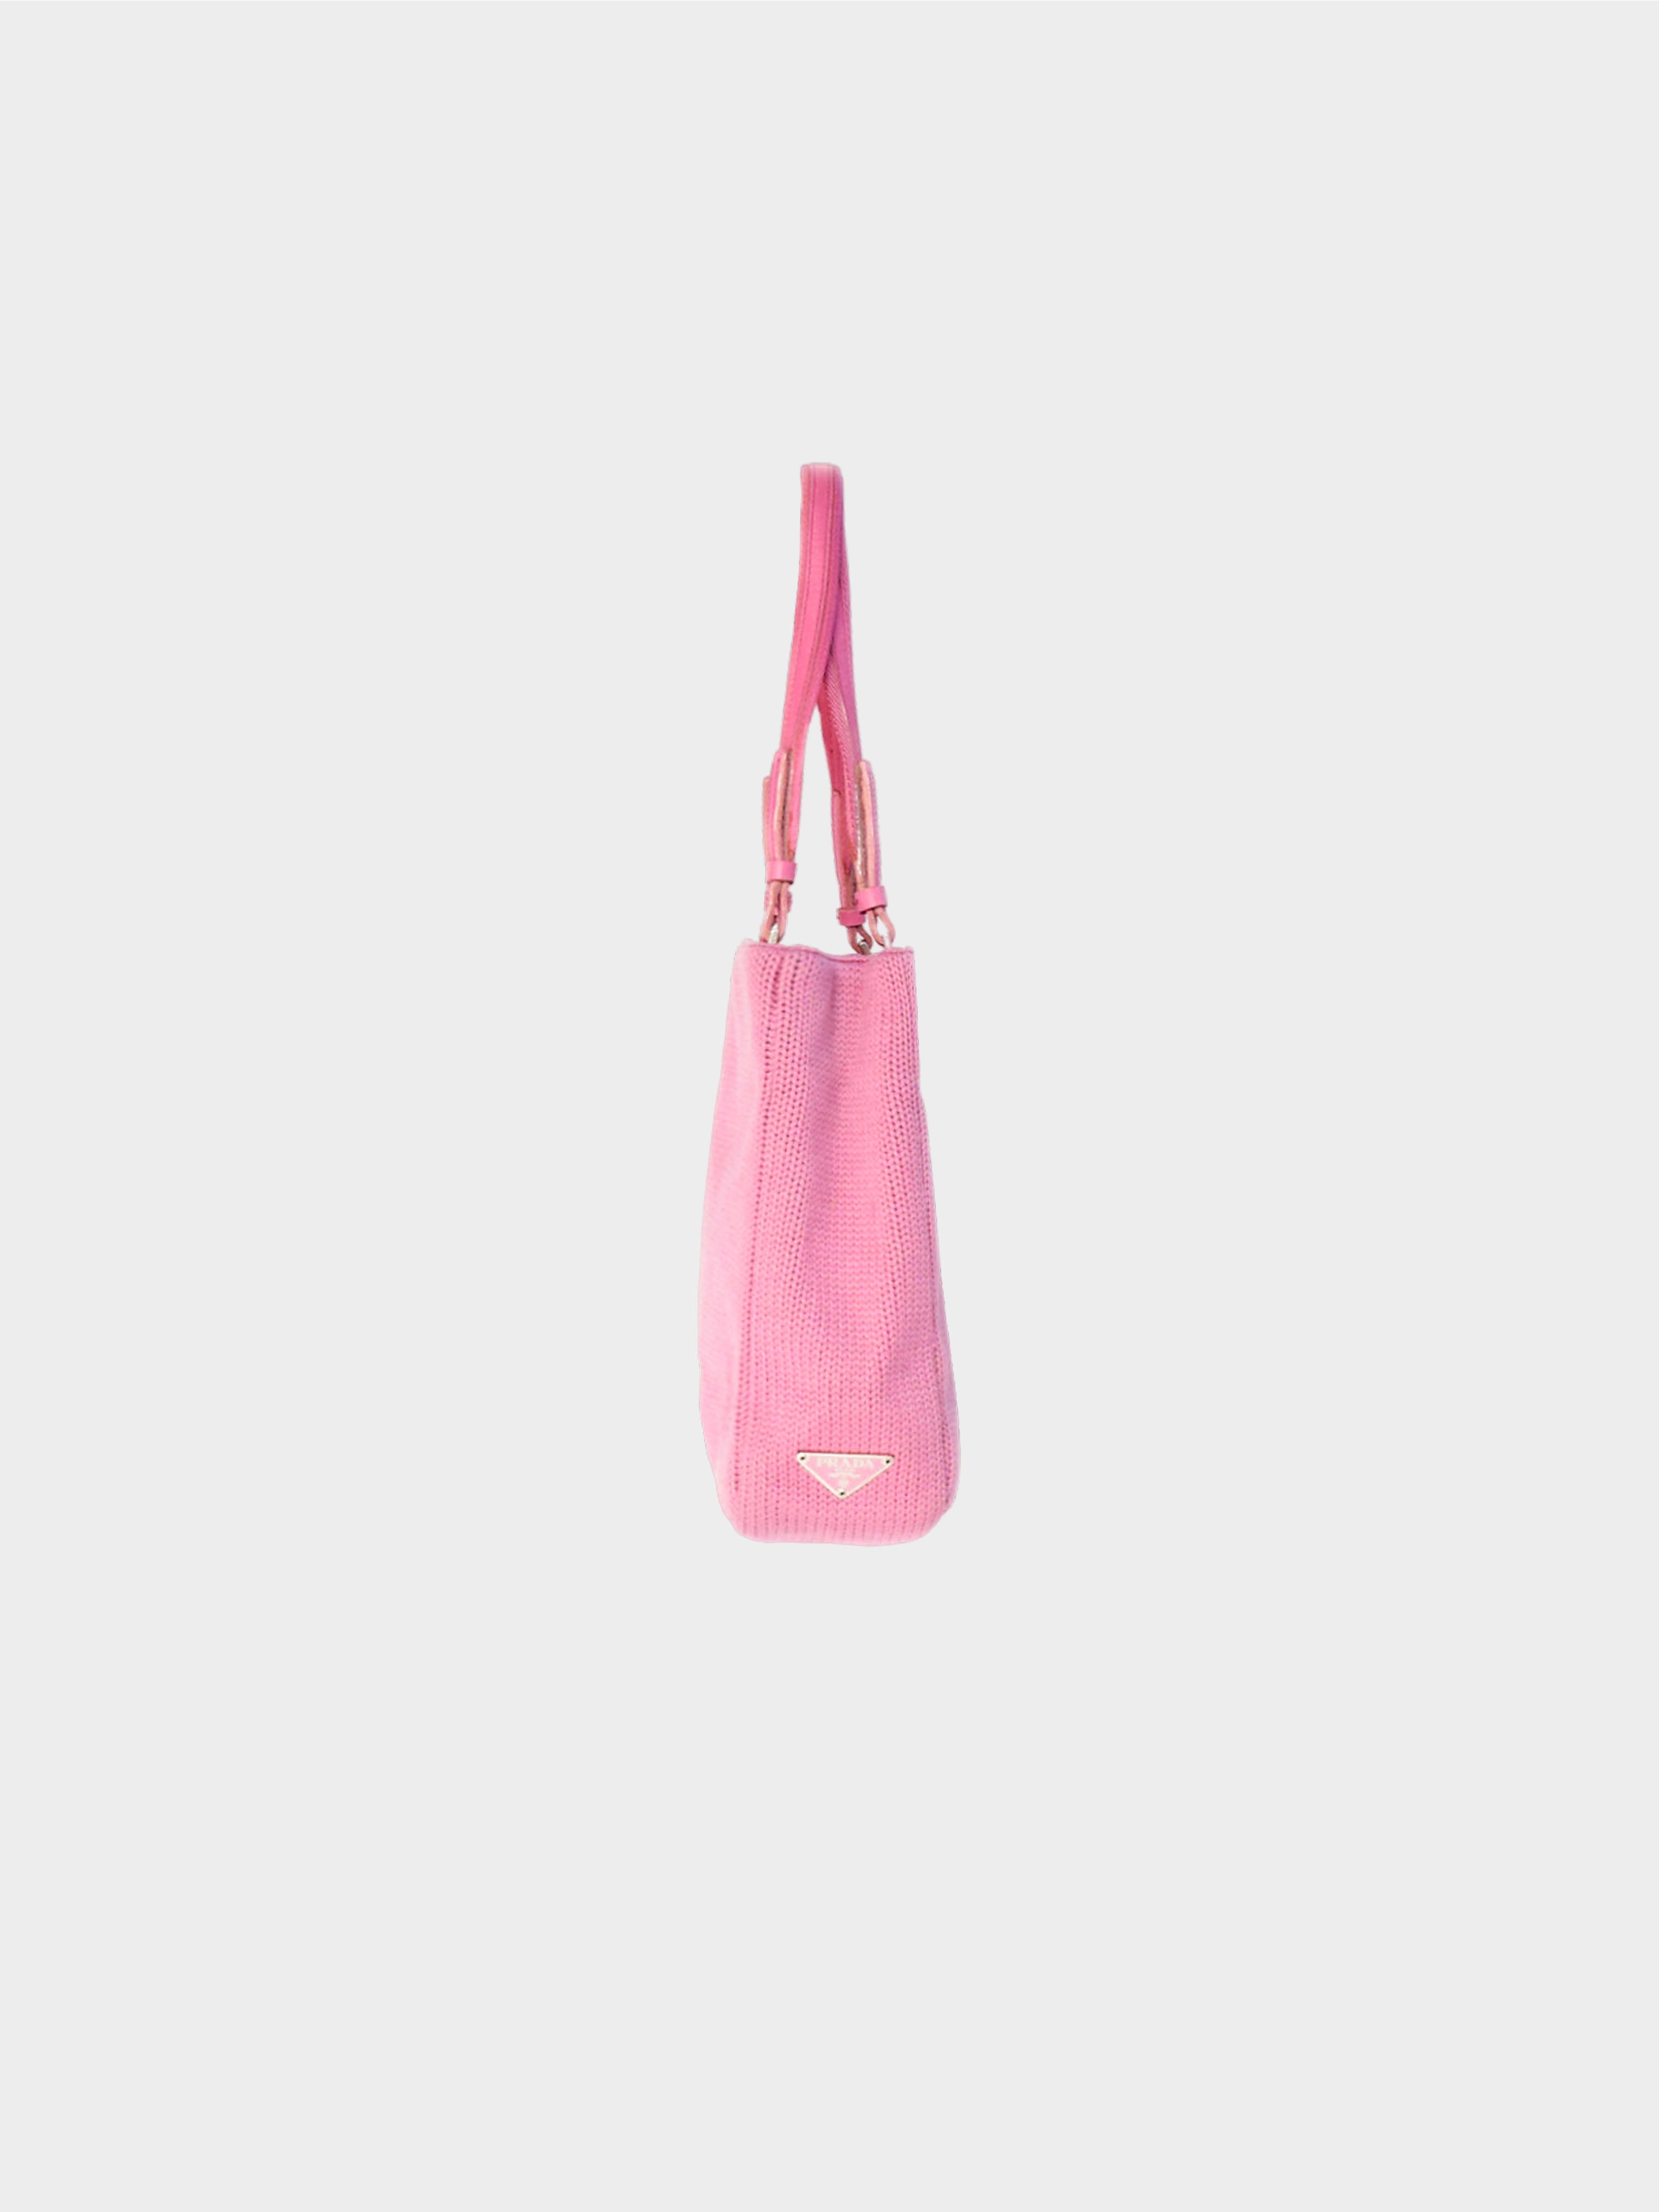 Prada FW 1999 Pink Knitted Tote Bag